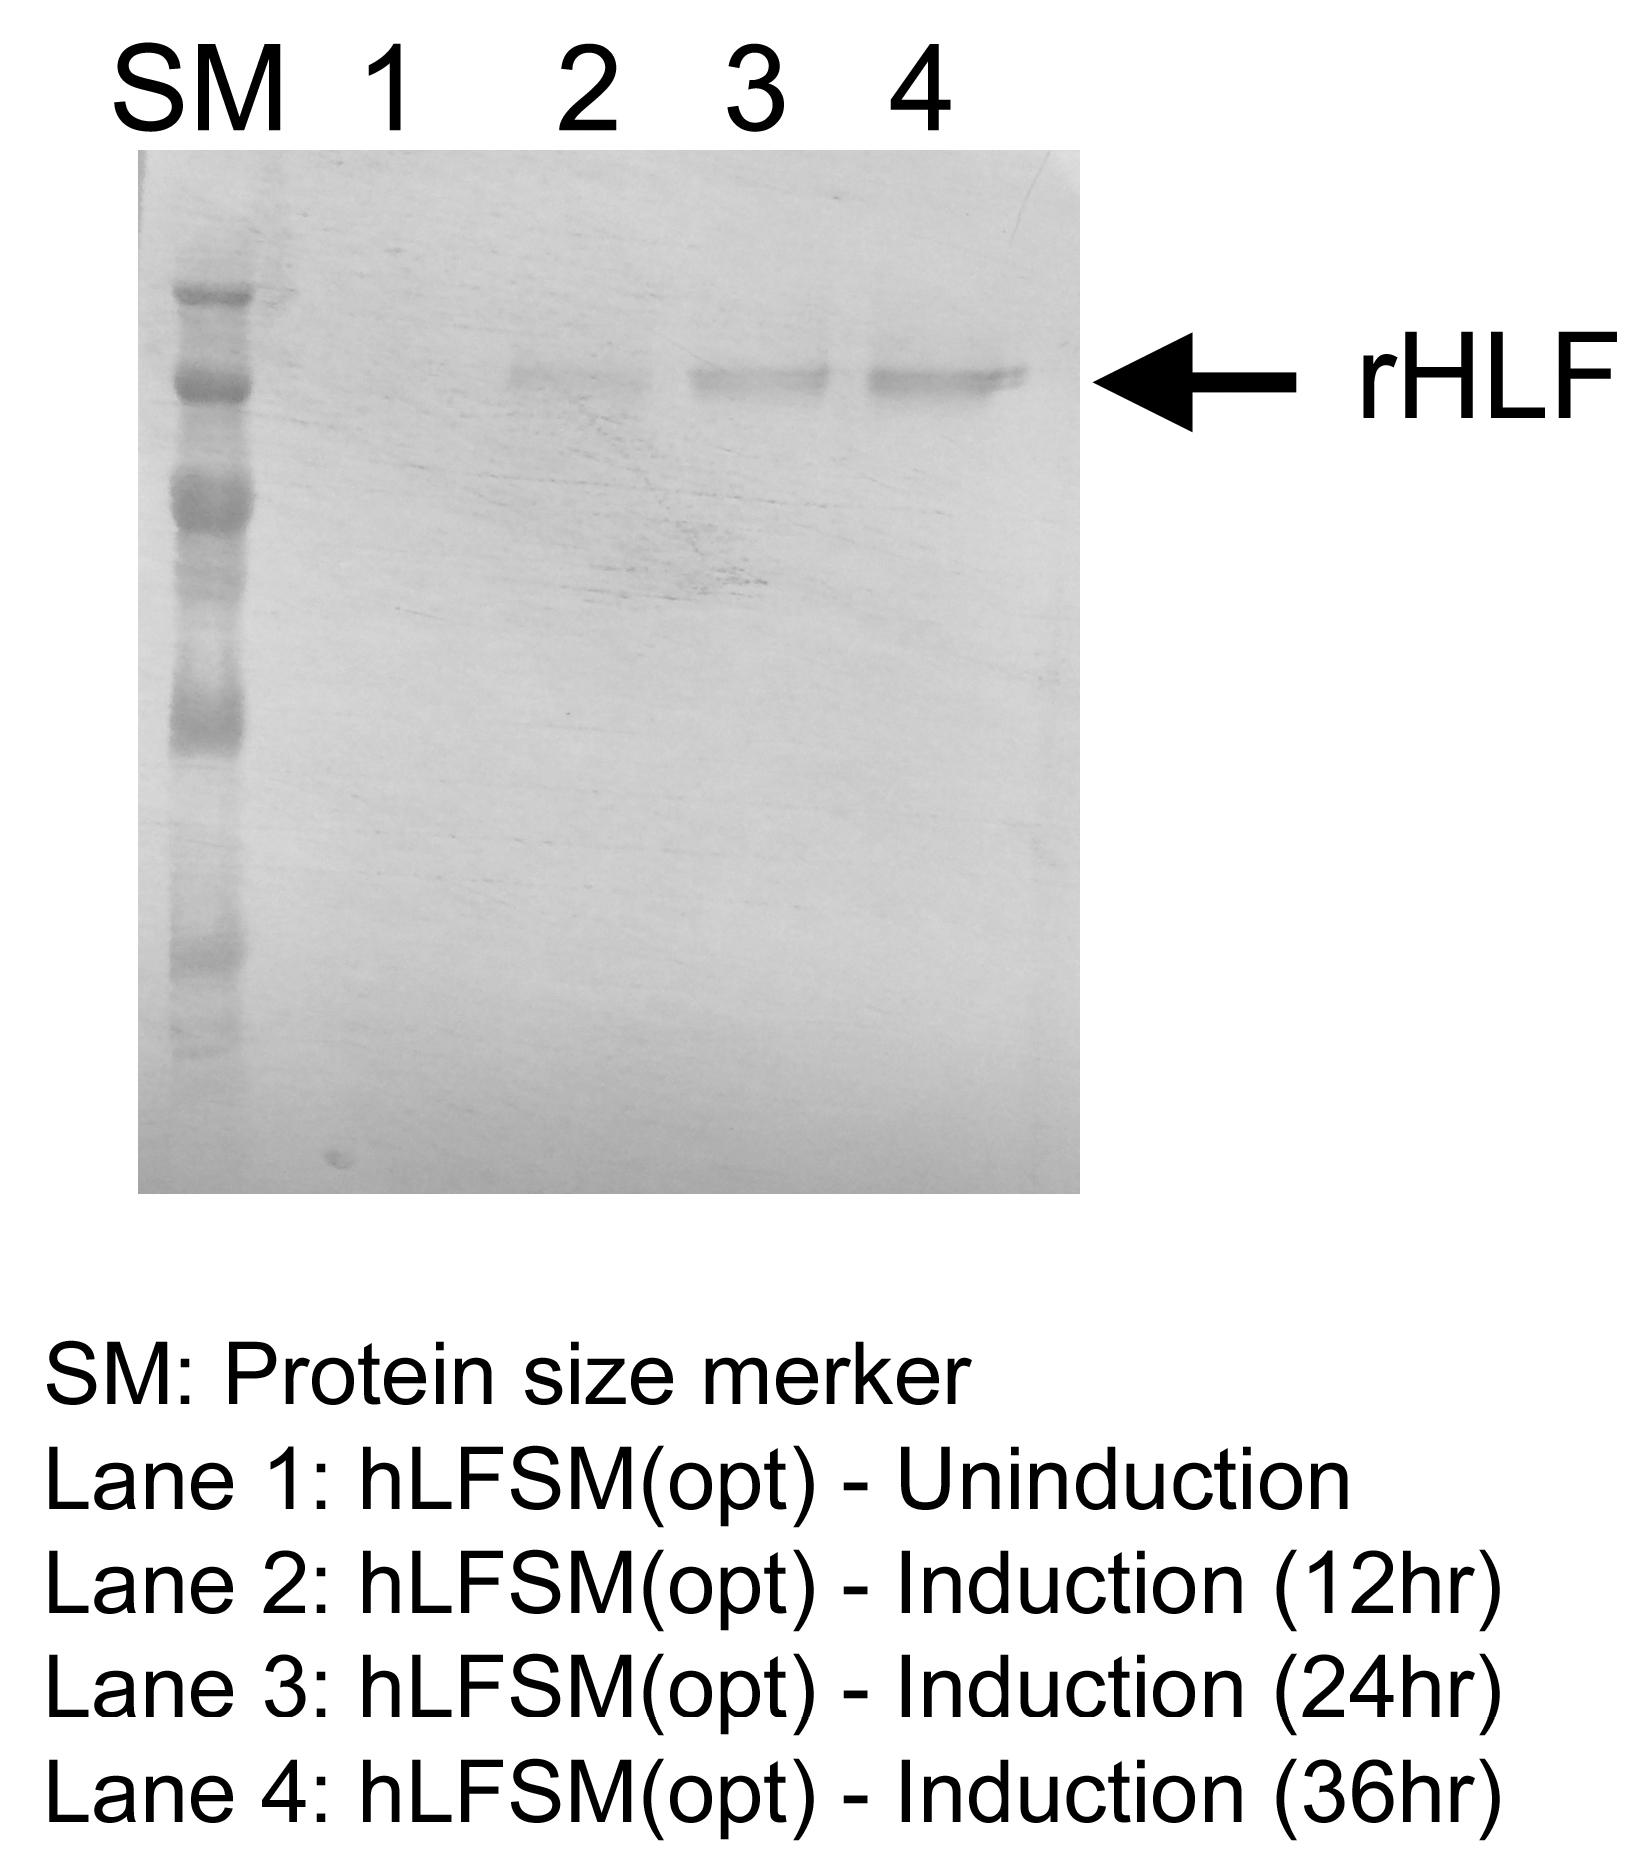 Western blotting(B)을 통한 재조합 균주 hLFSM(opt)로부터 사람 락토페린의 발현 재확인.